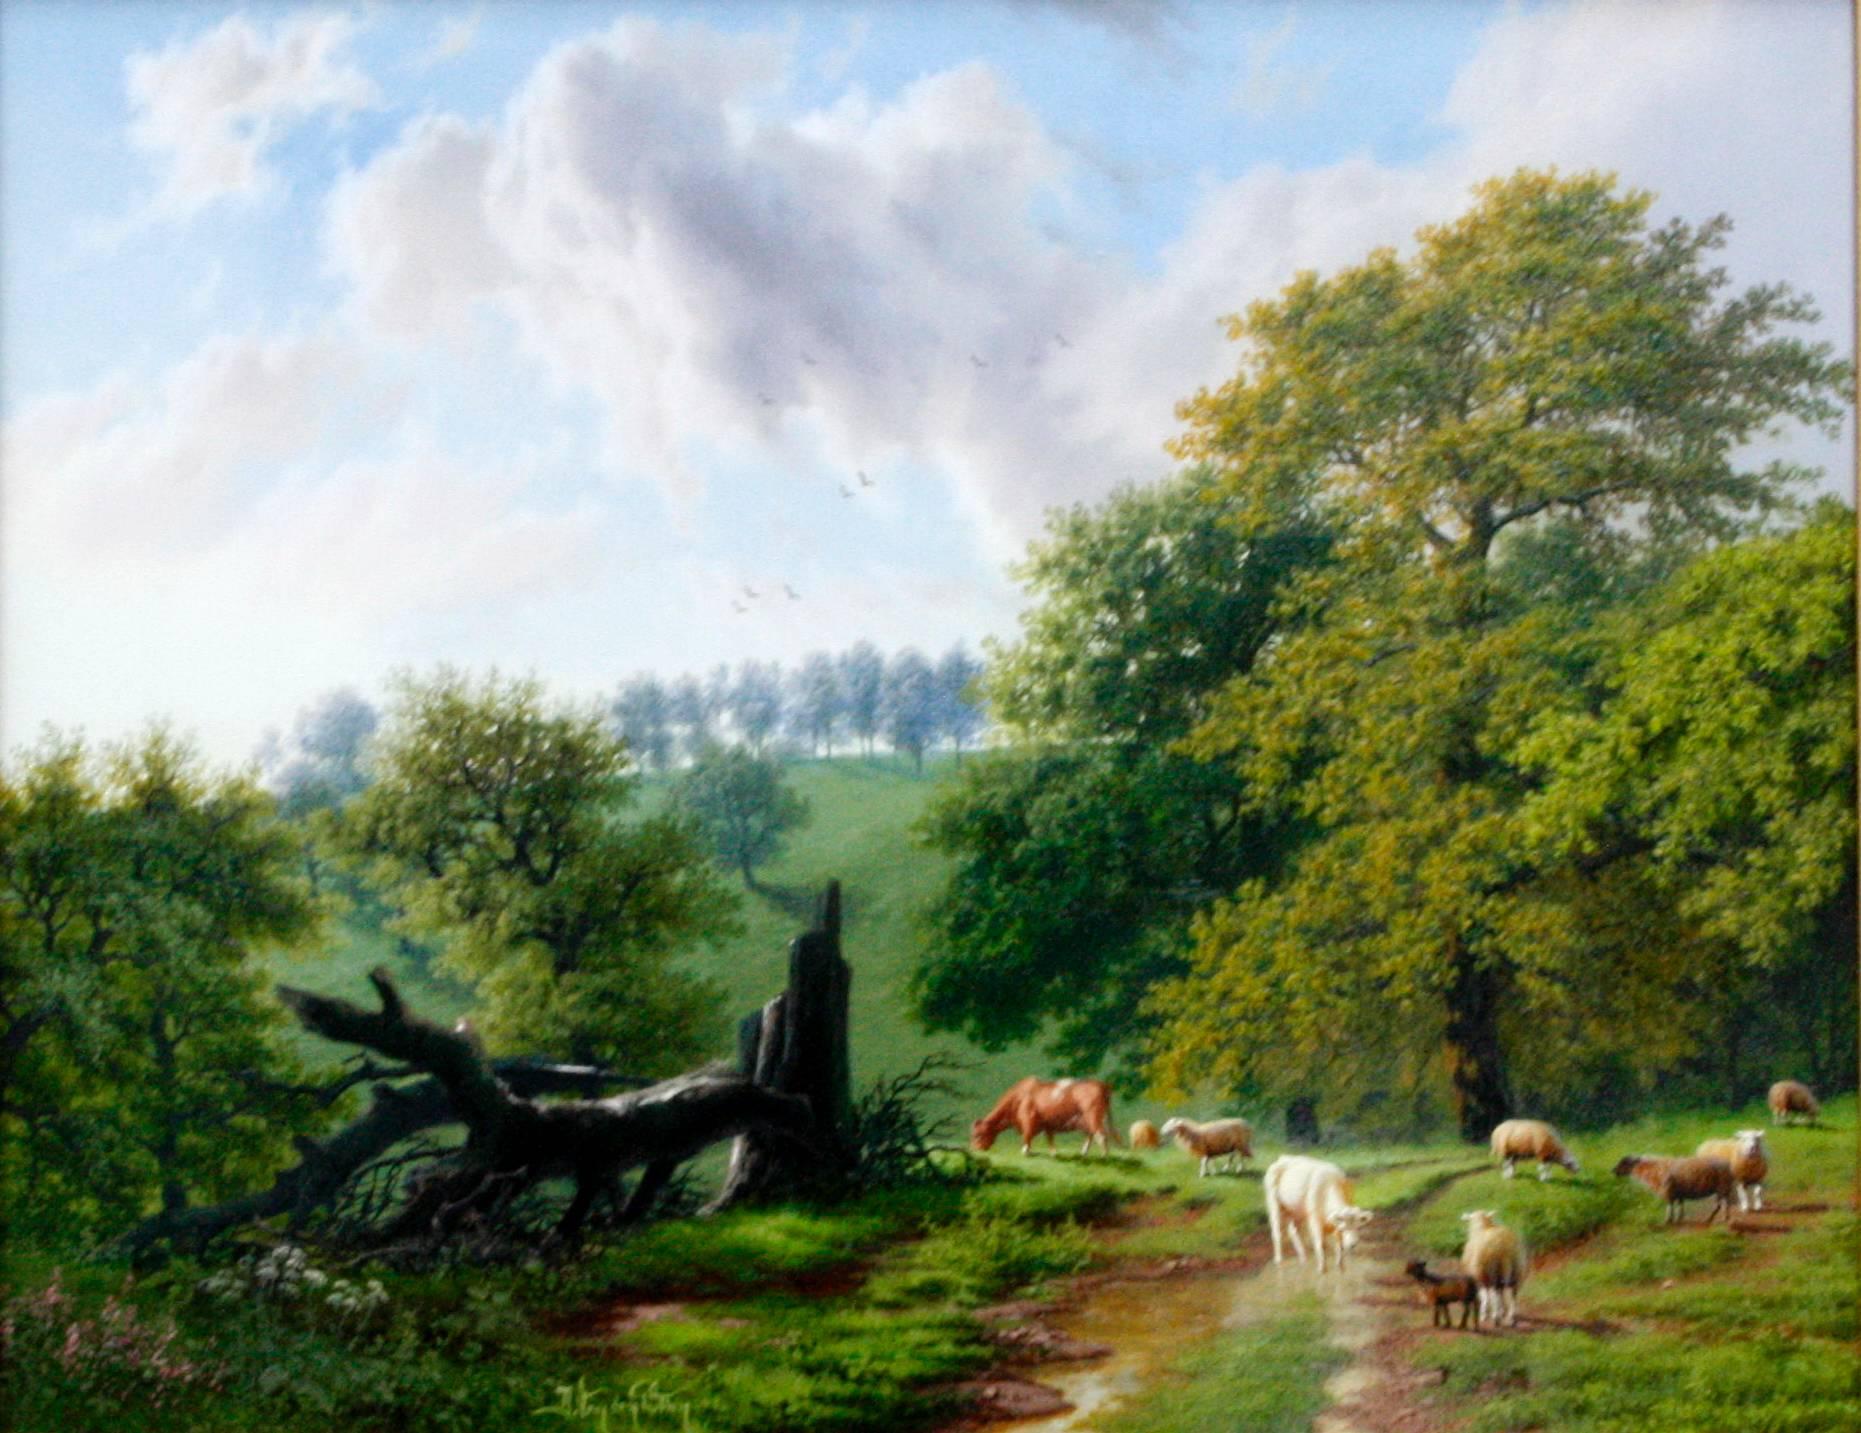 Fawsley, Northants - Painting by Daniel Van Der Putten